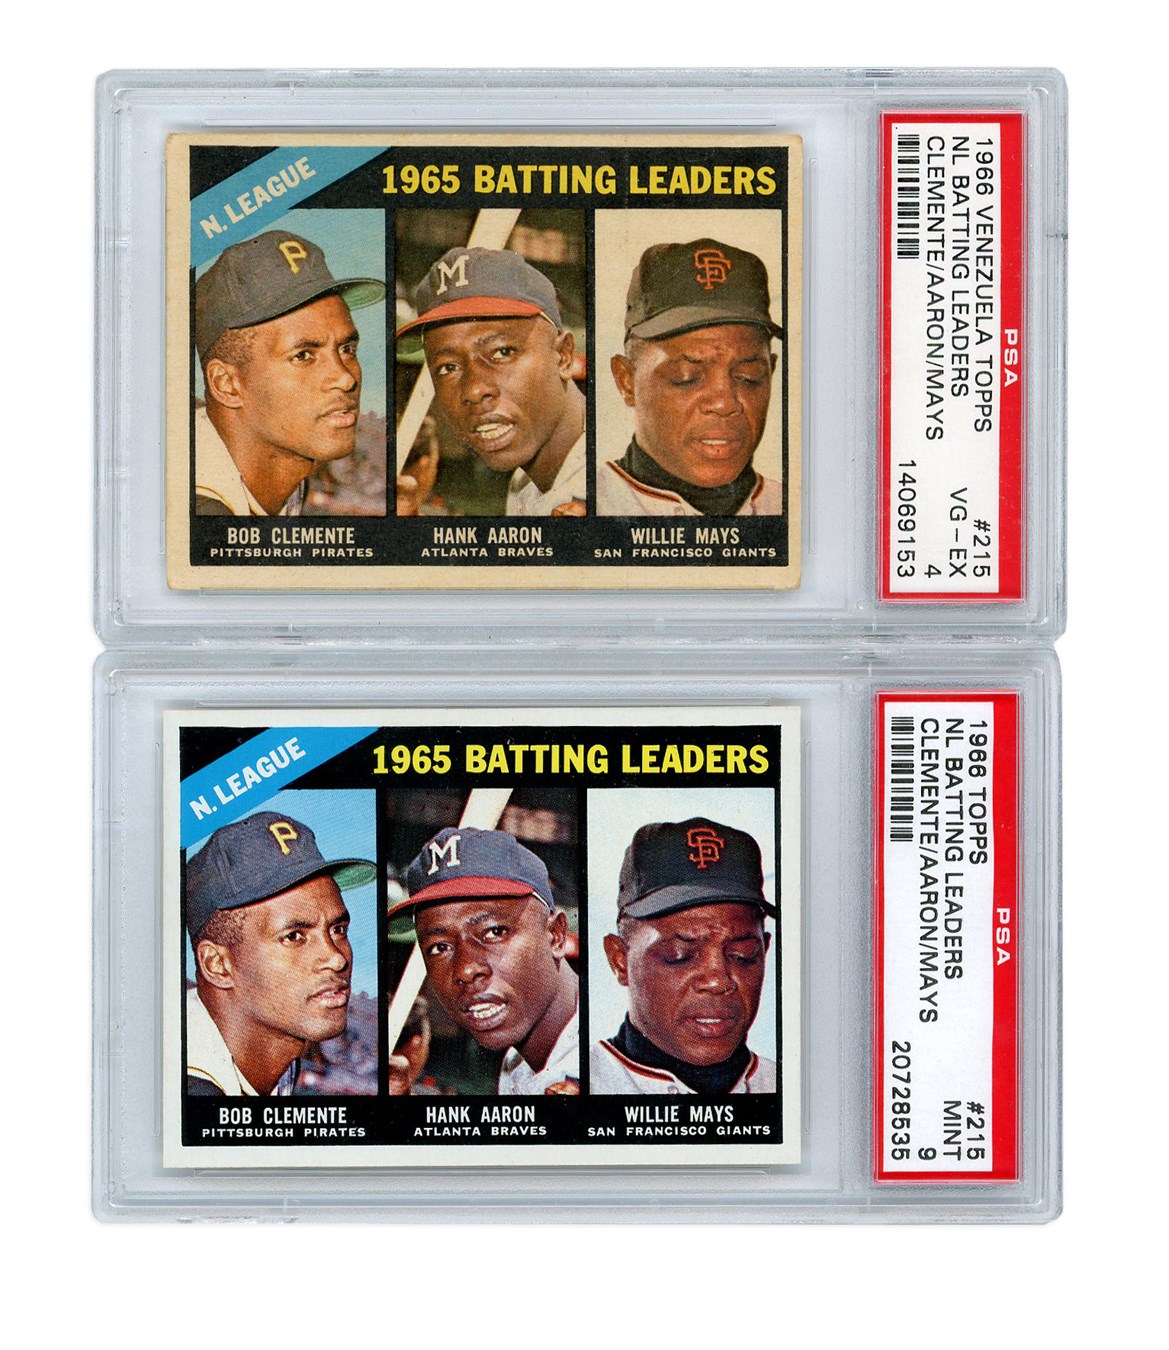 Baseball and Trading Cards - 1966 Topps NL Batting Leaders USA (PSA 9) and Venezuela (PSA 4) Cards